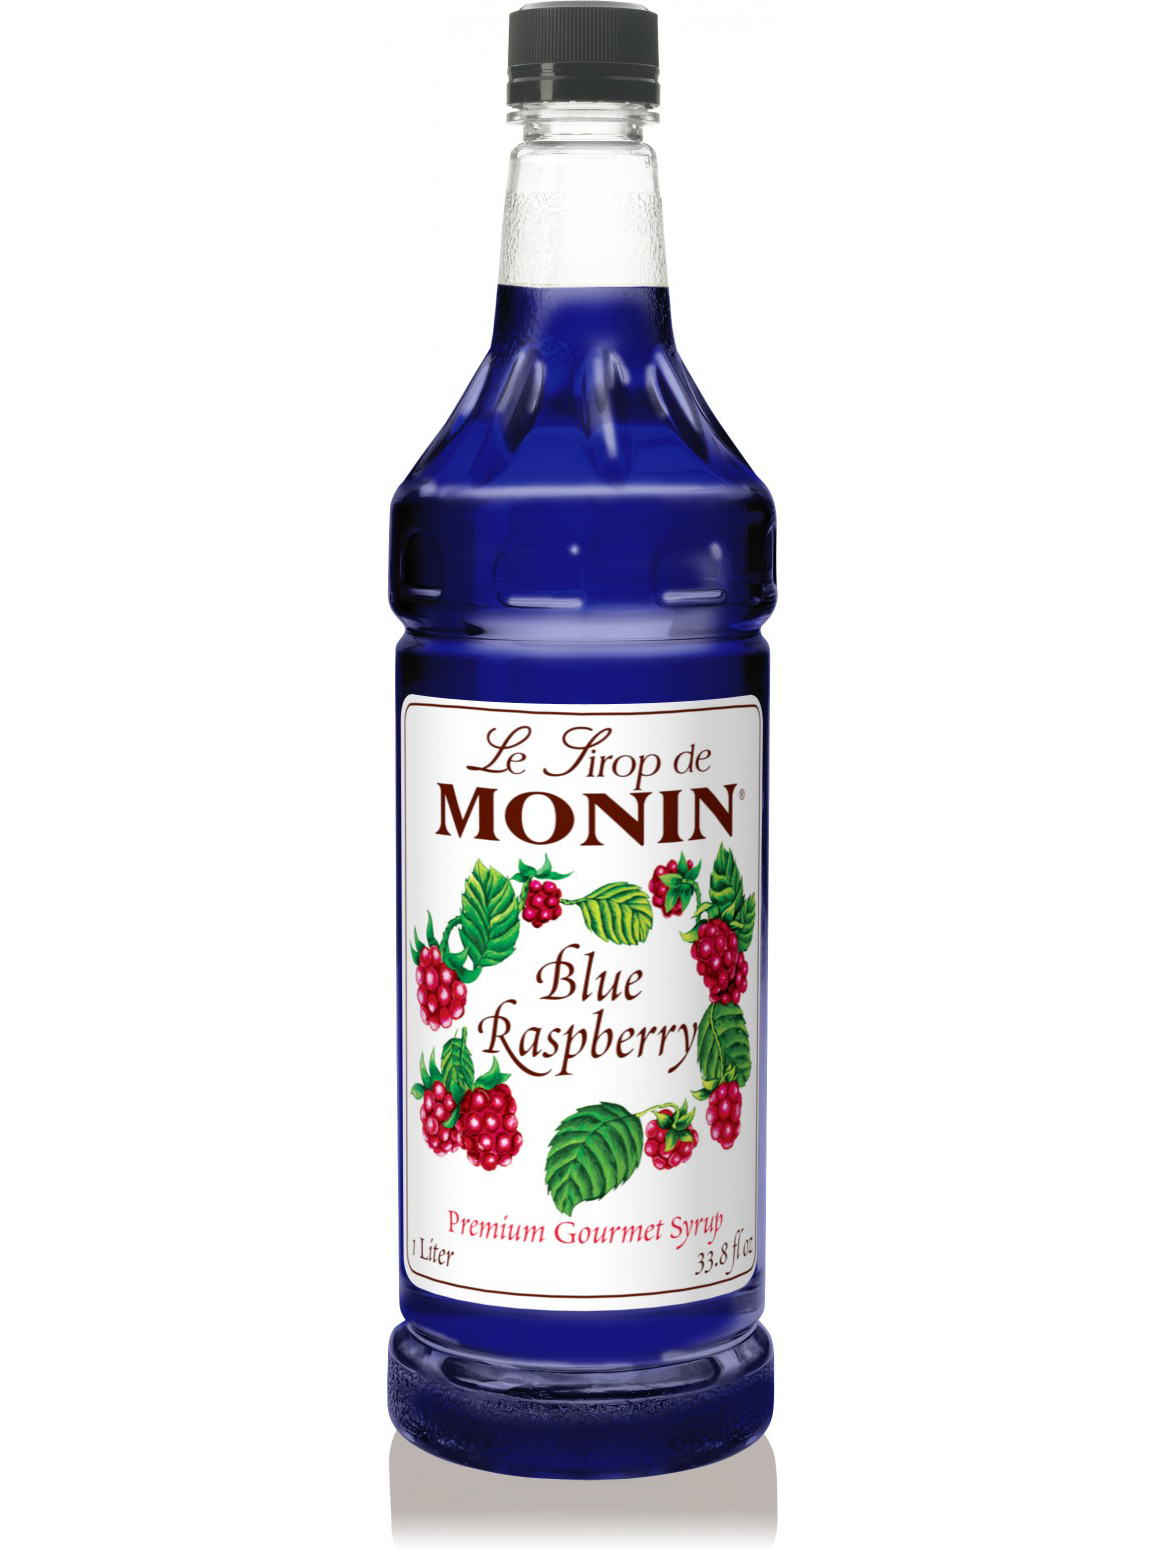 Monin Blue Raspberry Syrup